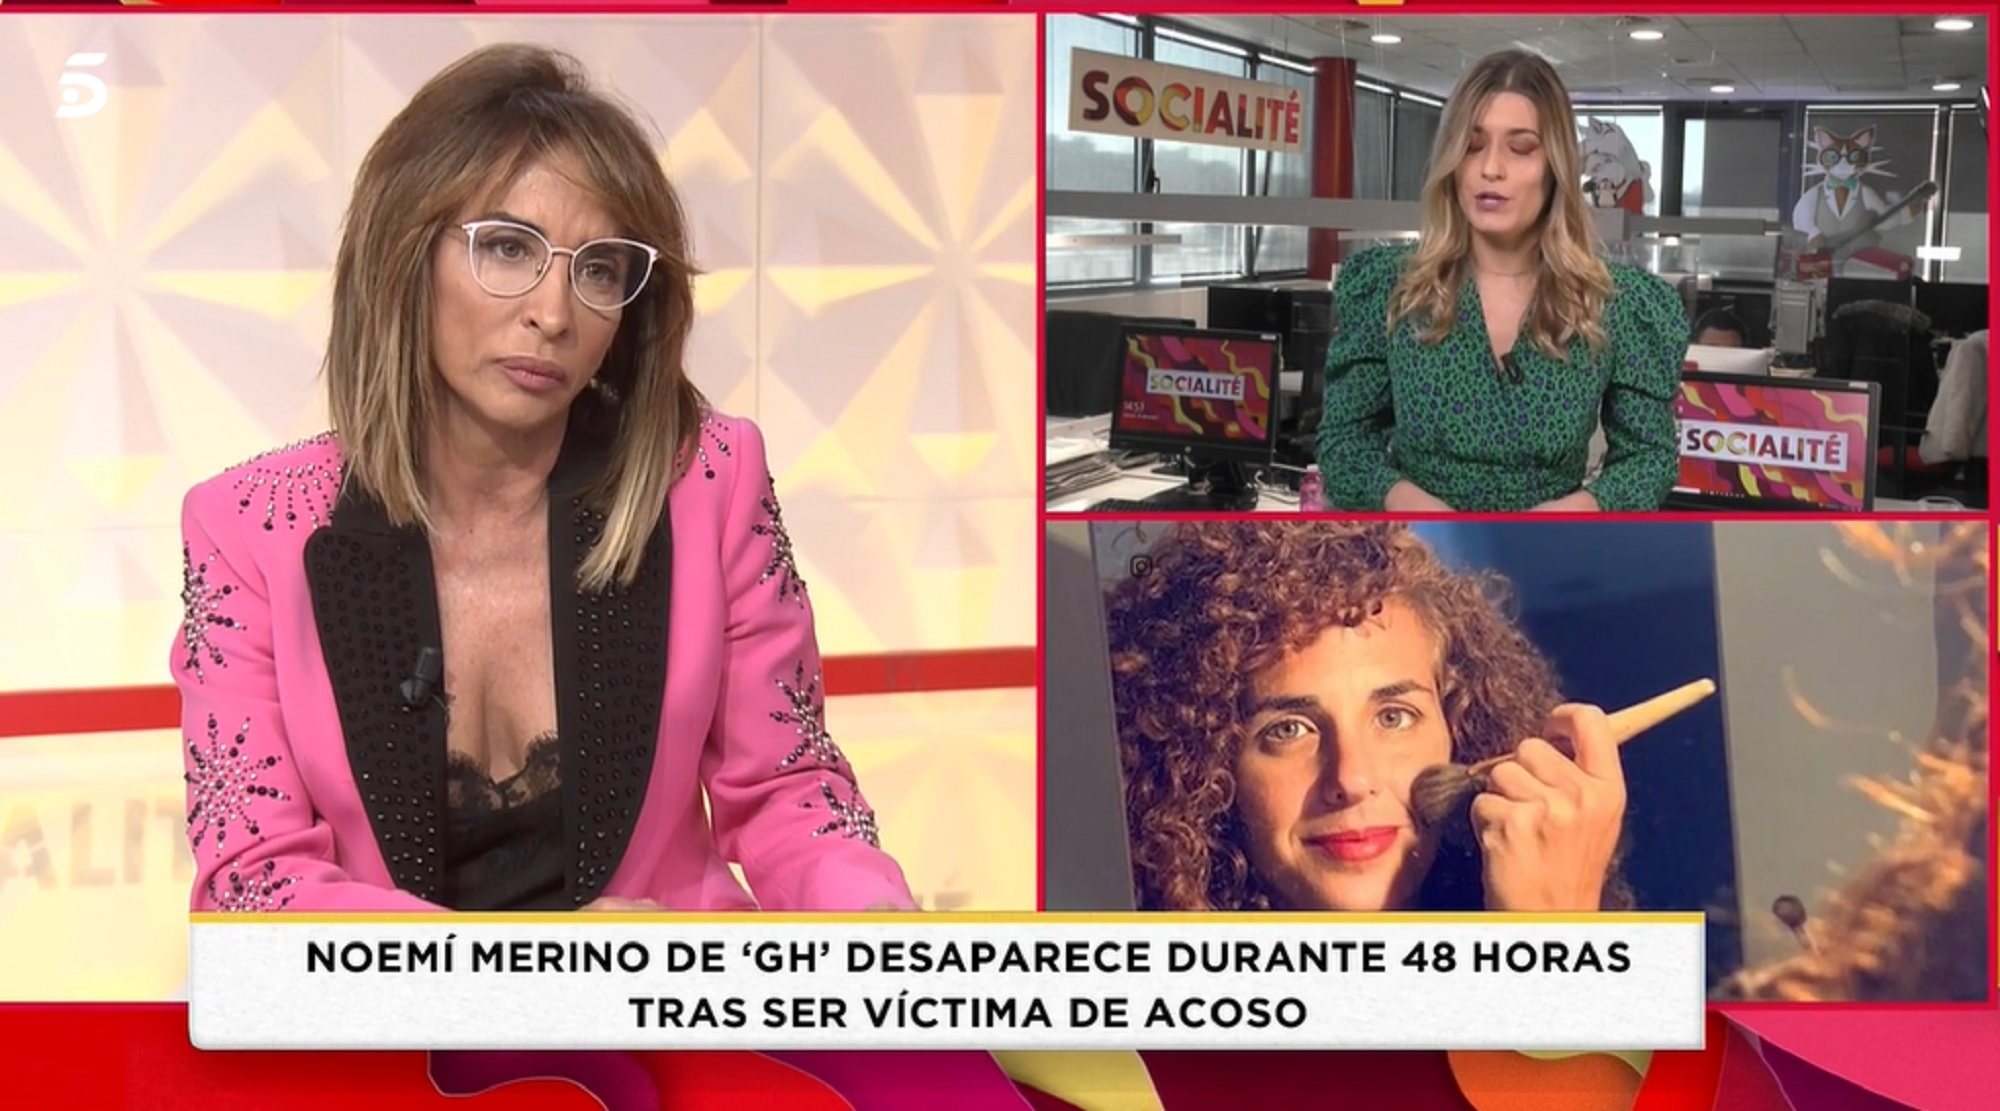 'Socialité' revela que Noemí Merino ha estado desaparecida durante 48 horas